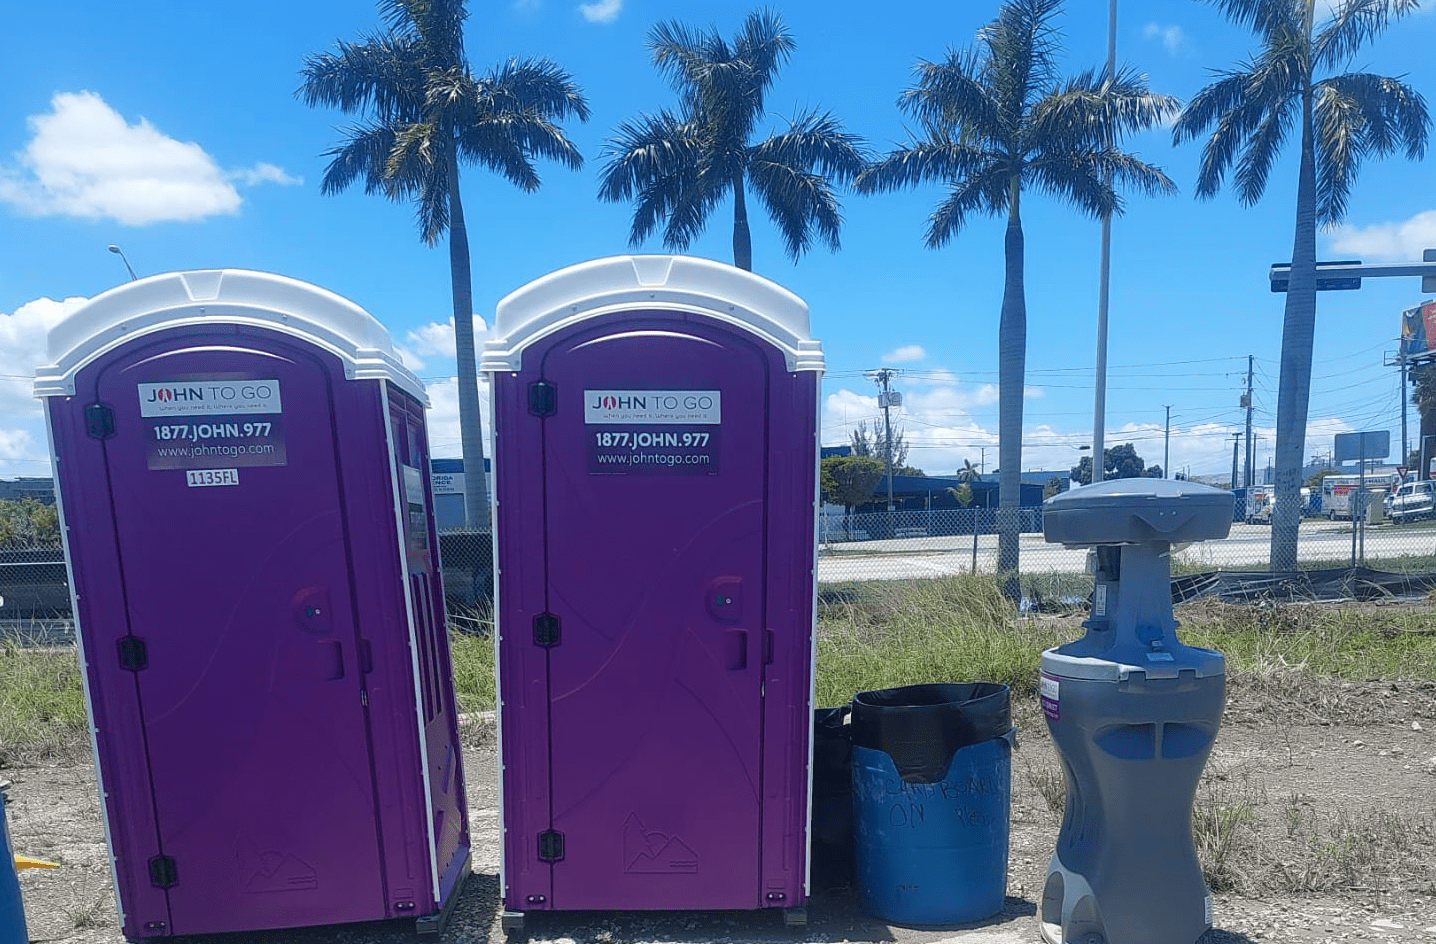 port o potties and handwashing station in Florida